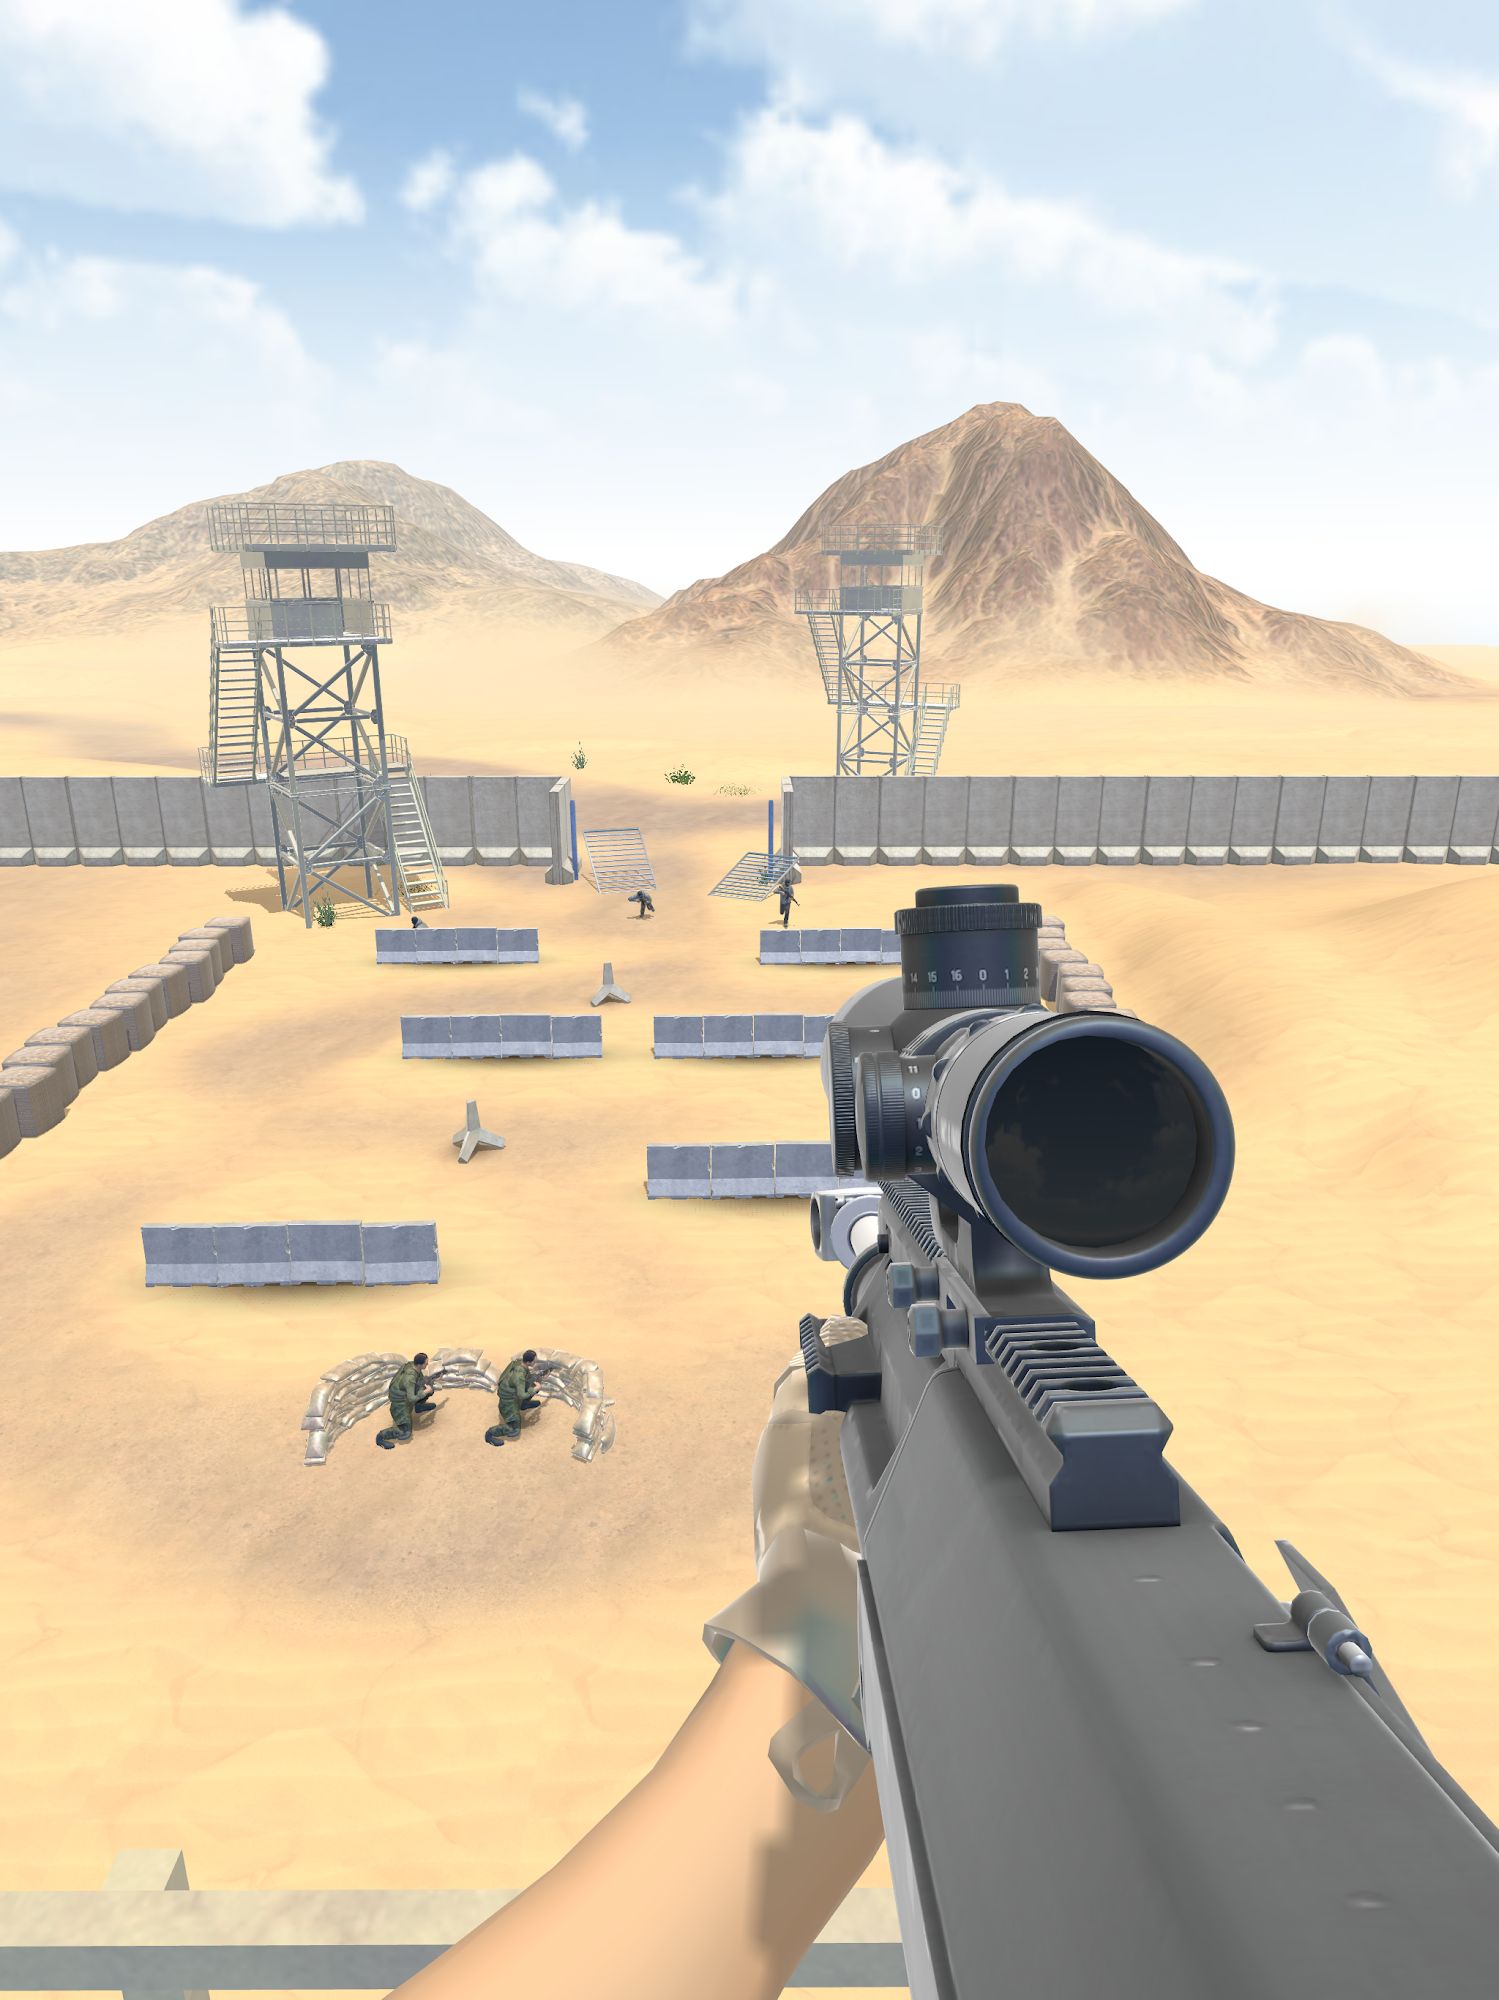 Sniper Siege: Defend & Destroy - Android game screenshots.